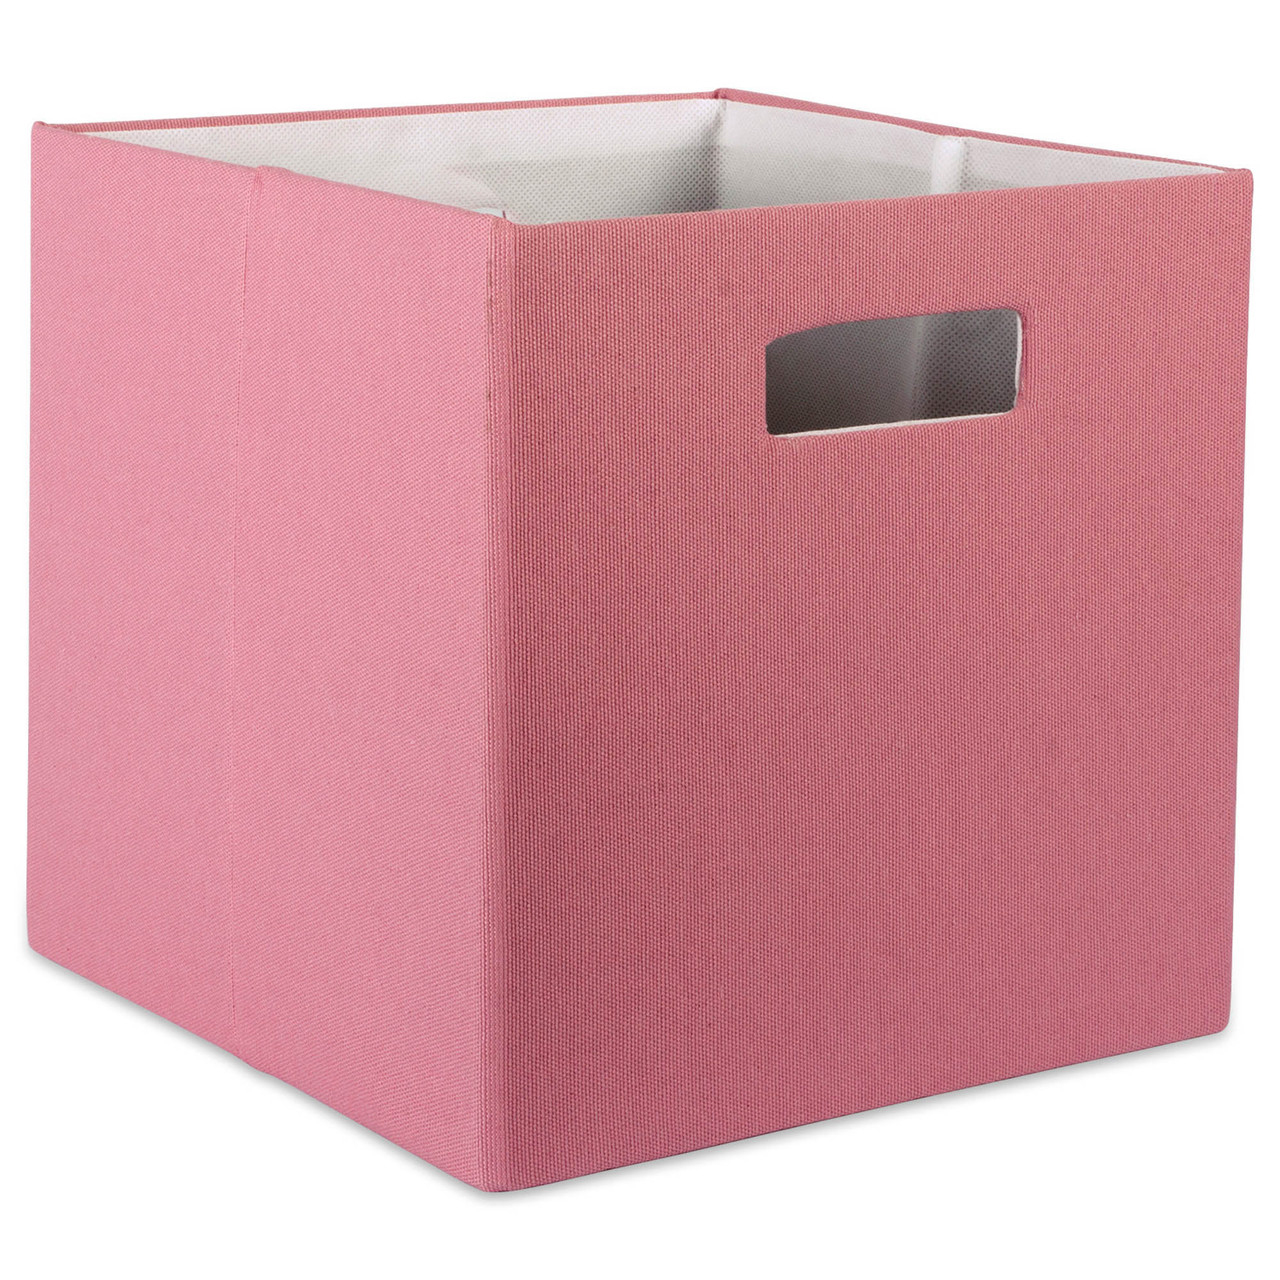 rose pink 13 inch folding storage cube bin